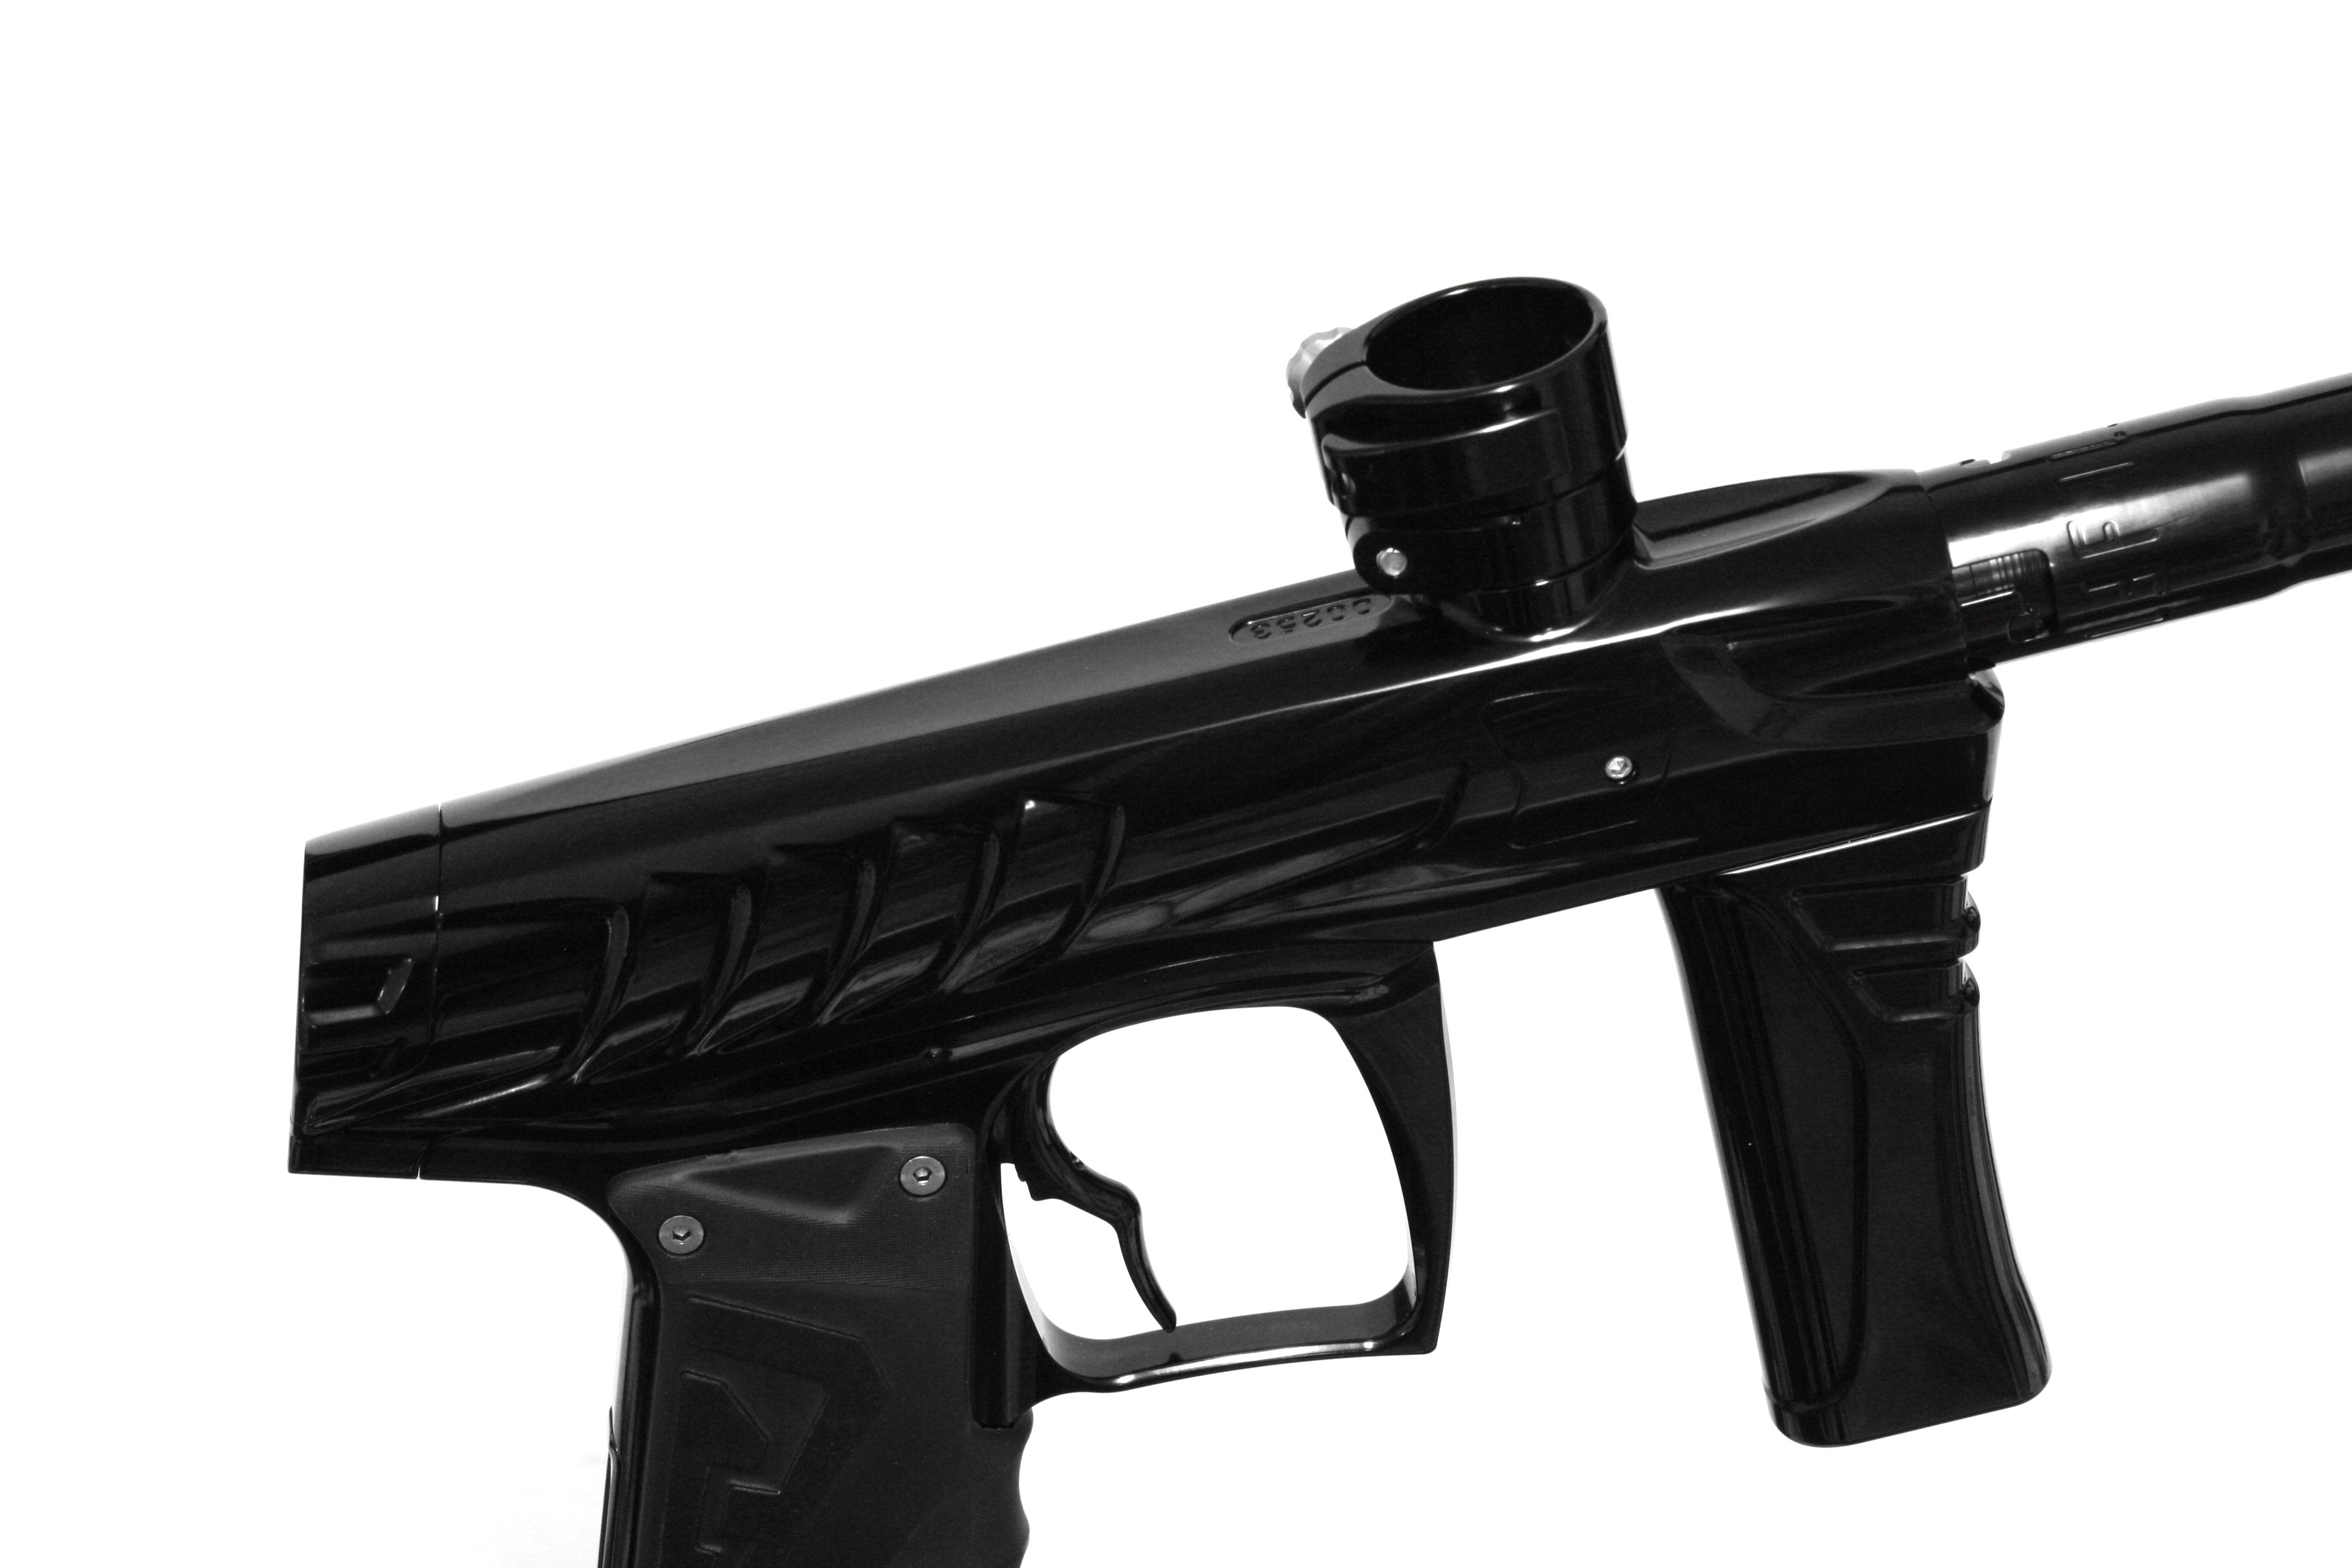 Field One Force Paintball Gun - Gloss Black *Pre-Order*